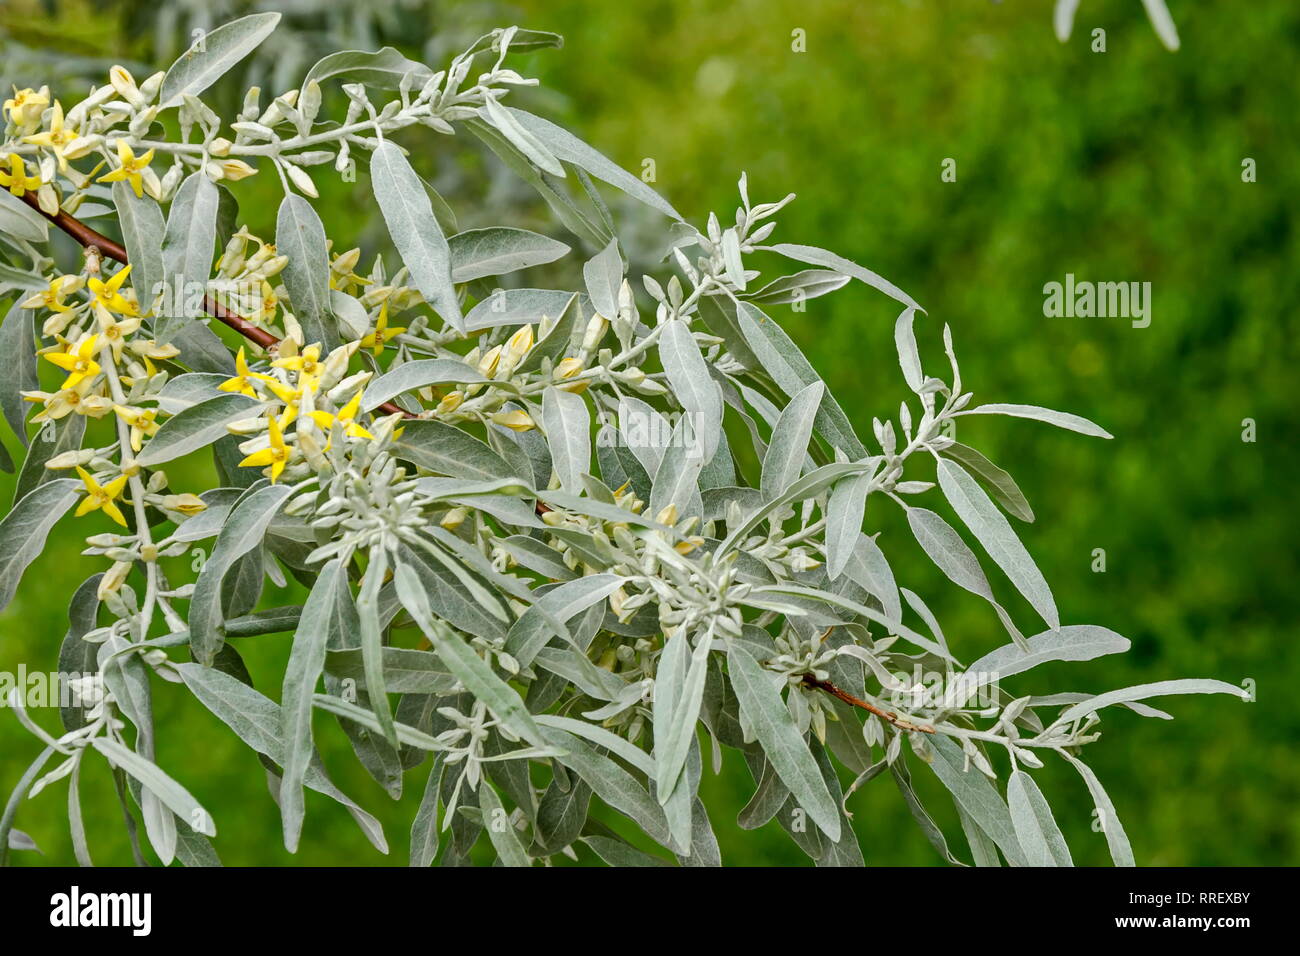 Branch with fresh bloom  of White willow or Salix alba tree closeup in garden, Sofia, Bulgaria Stock Photo